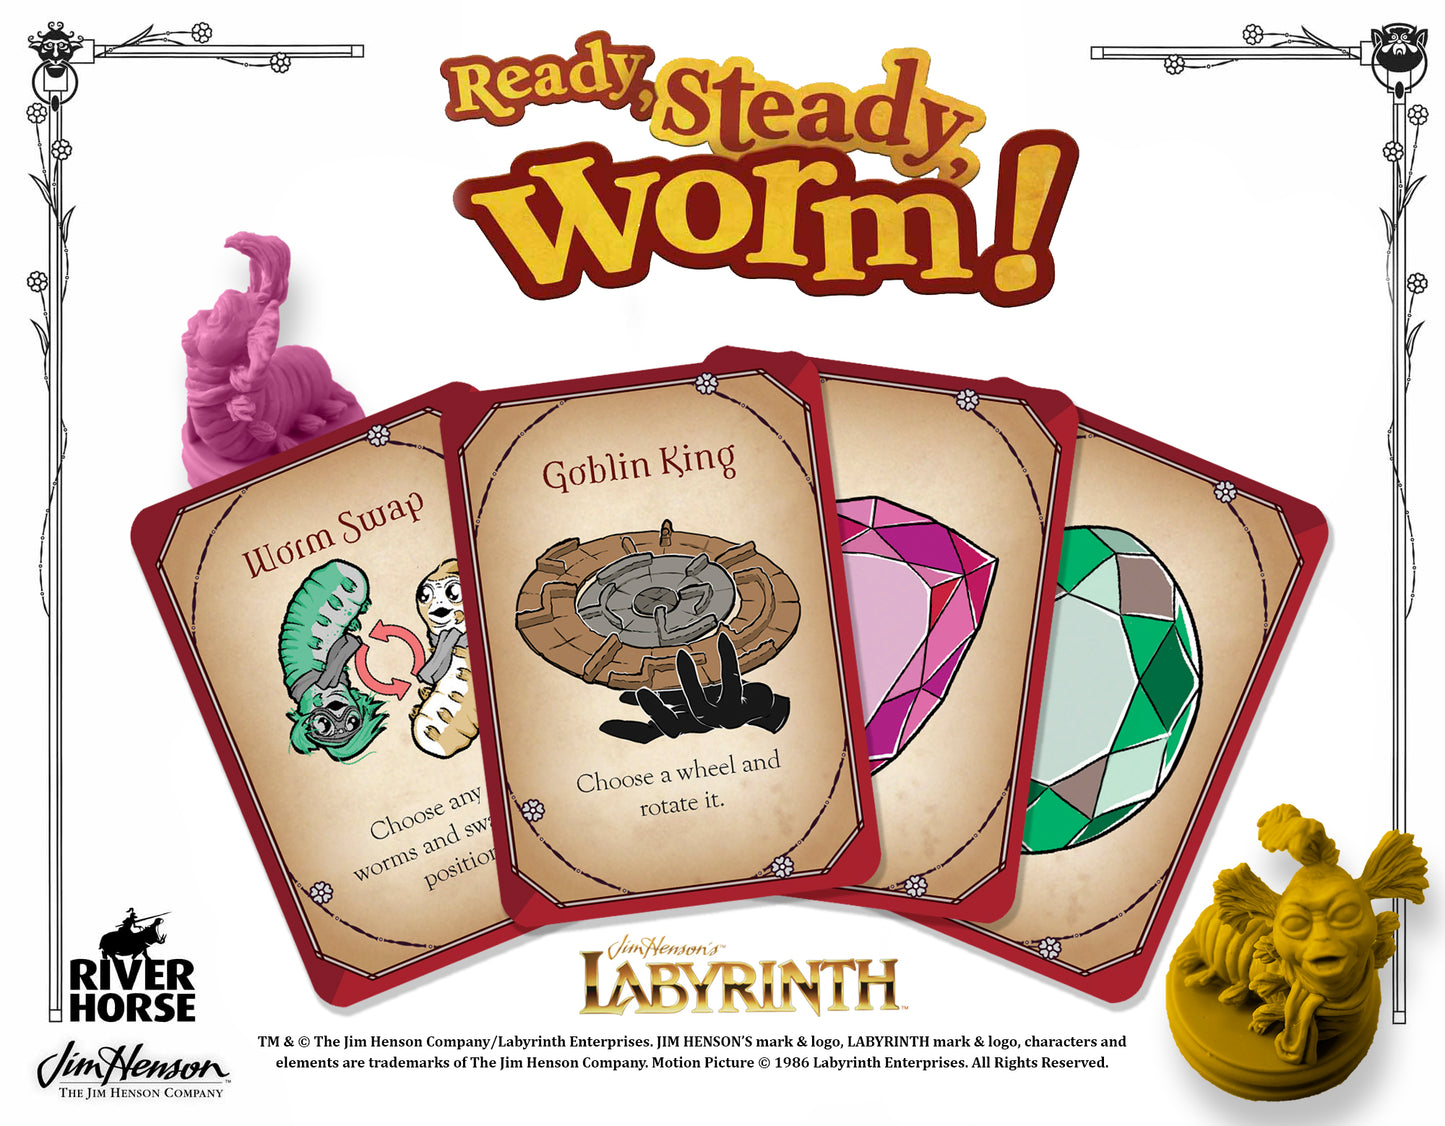 Jim Henson's Labyrinth: Ready, Steady, Worm!